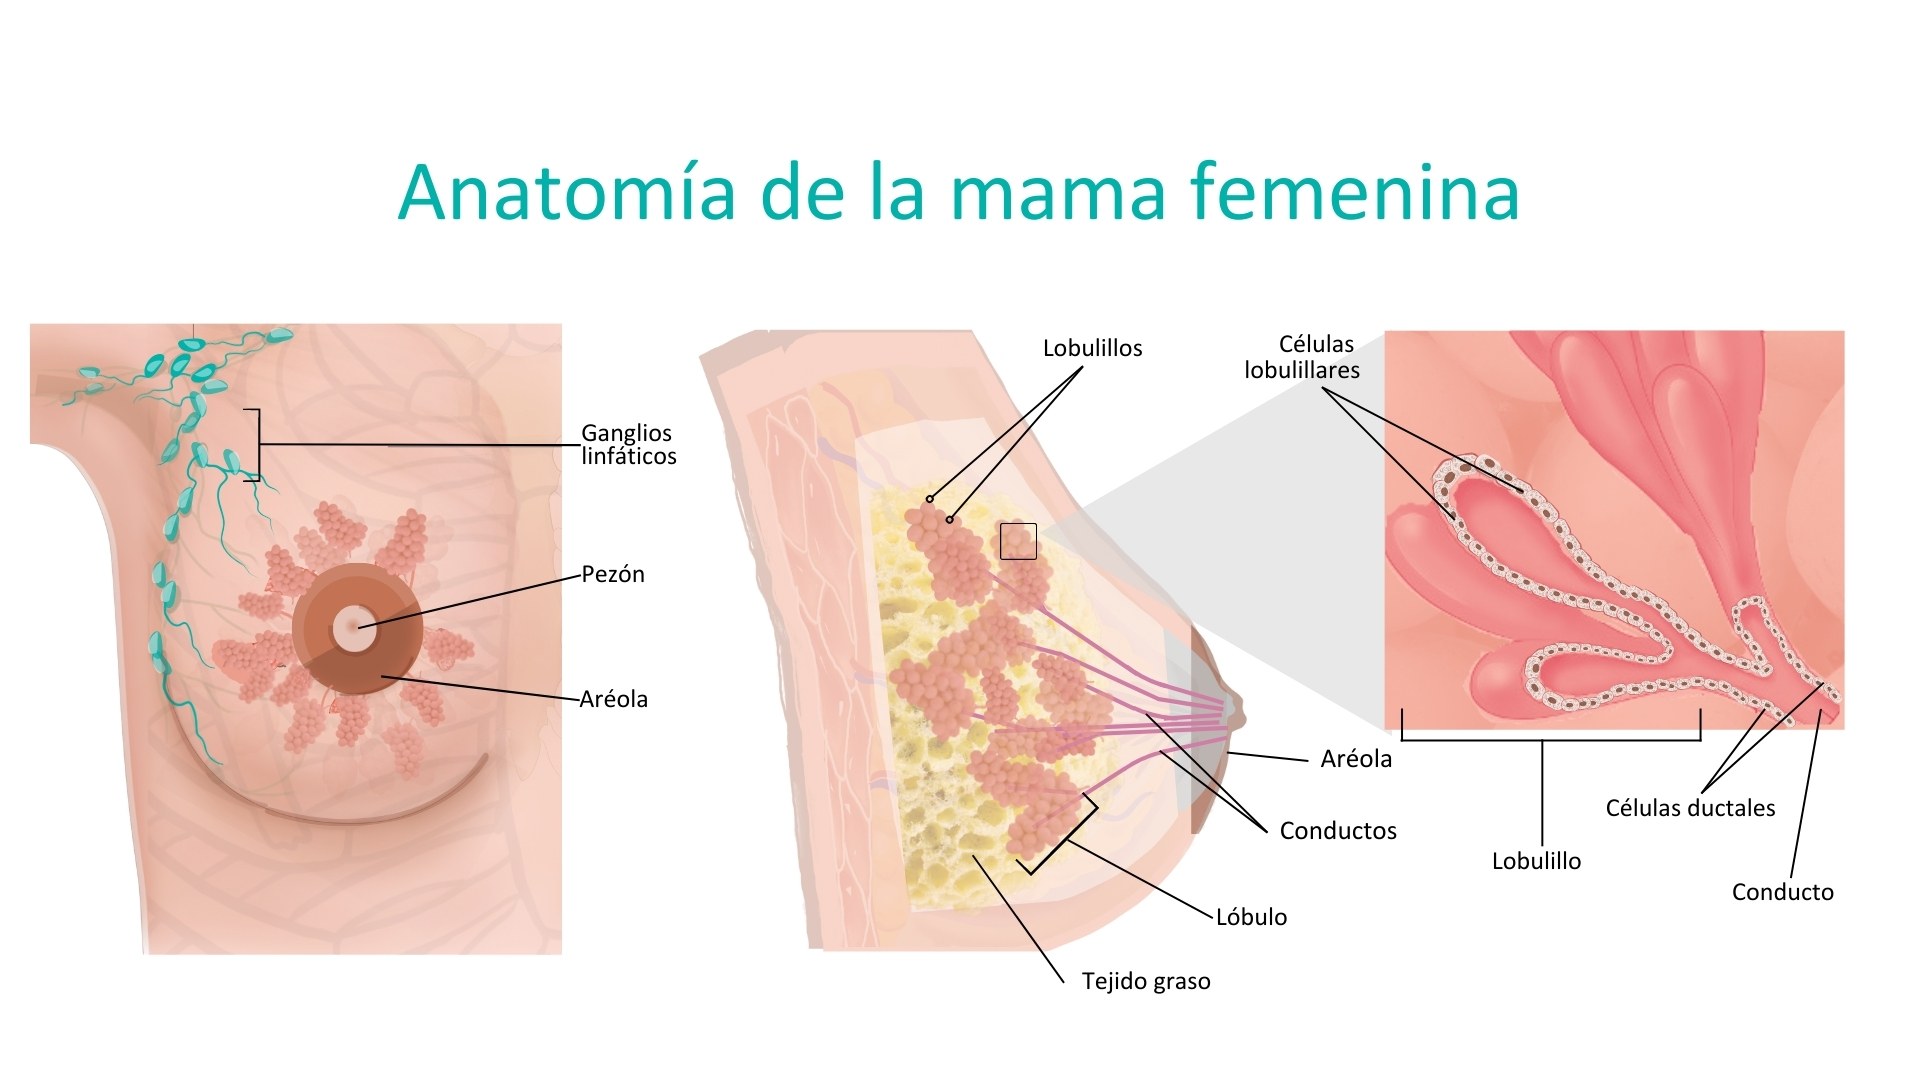 Anatomia de la mama